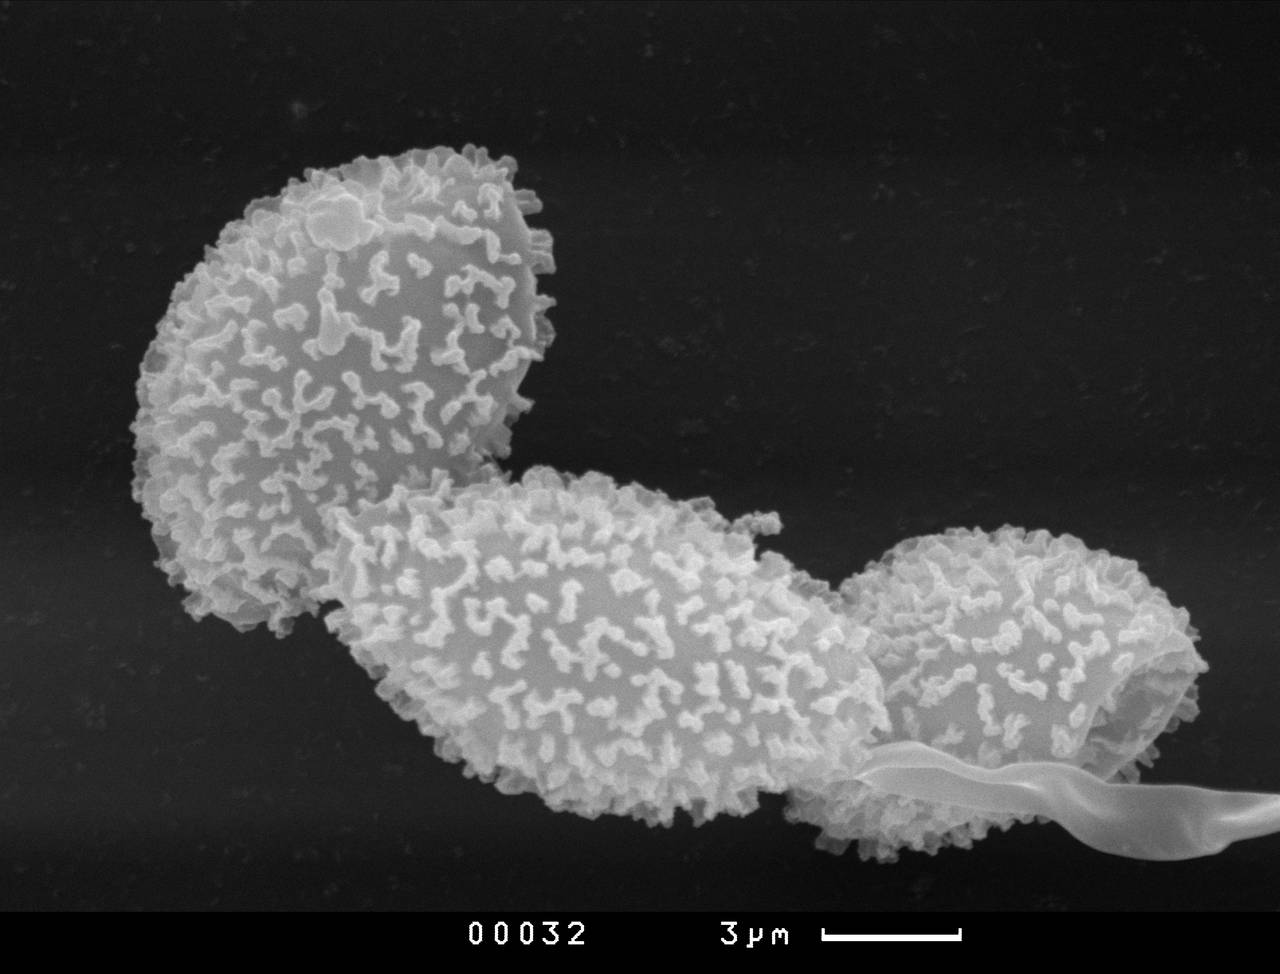 Diacheopsis nannengae, споры и фрагмент капиллиция, СЭМ, Терский, Murmansk Oblast (Russia)